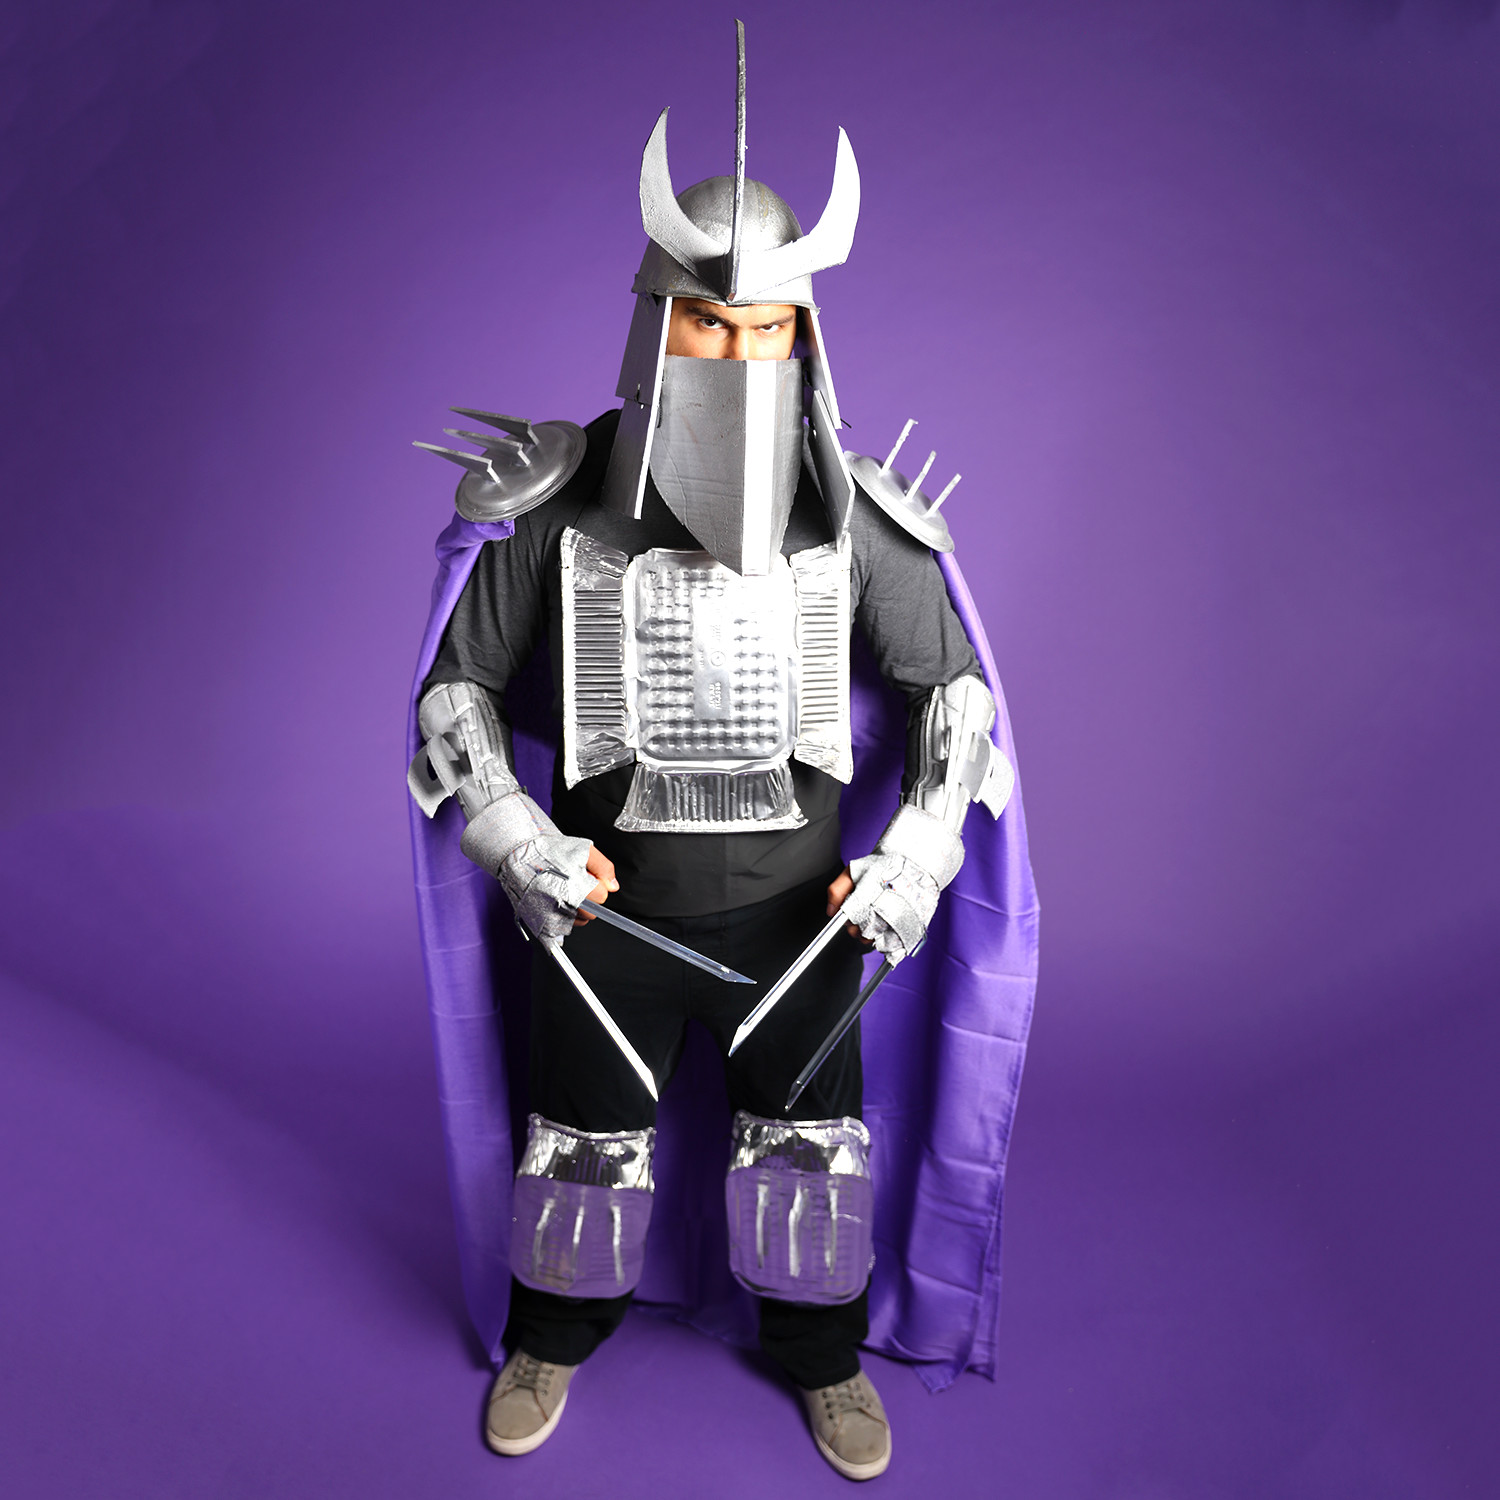 Best ideas about DIY Shredder Costume
. Save or Pin TMNT DIY Shredder Costume Now.